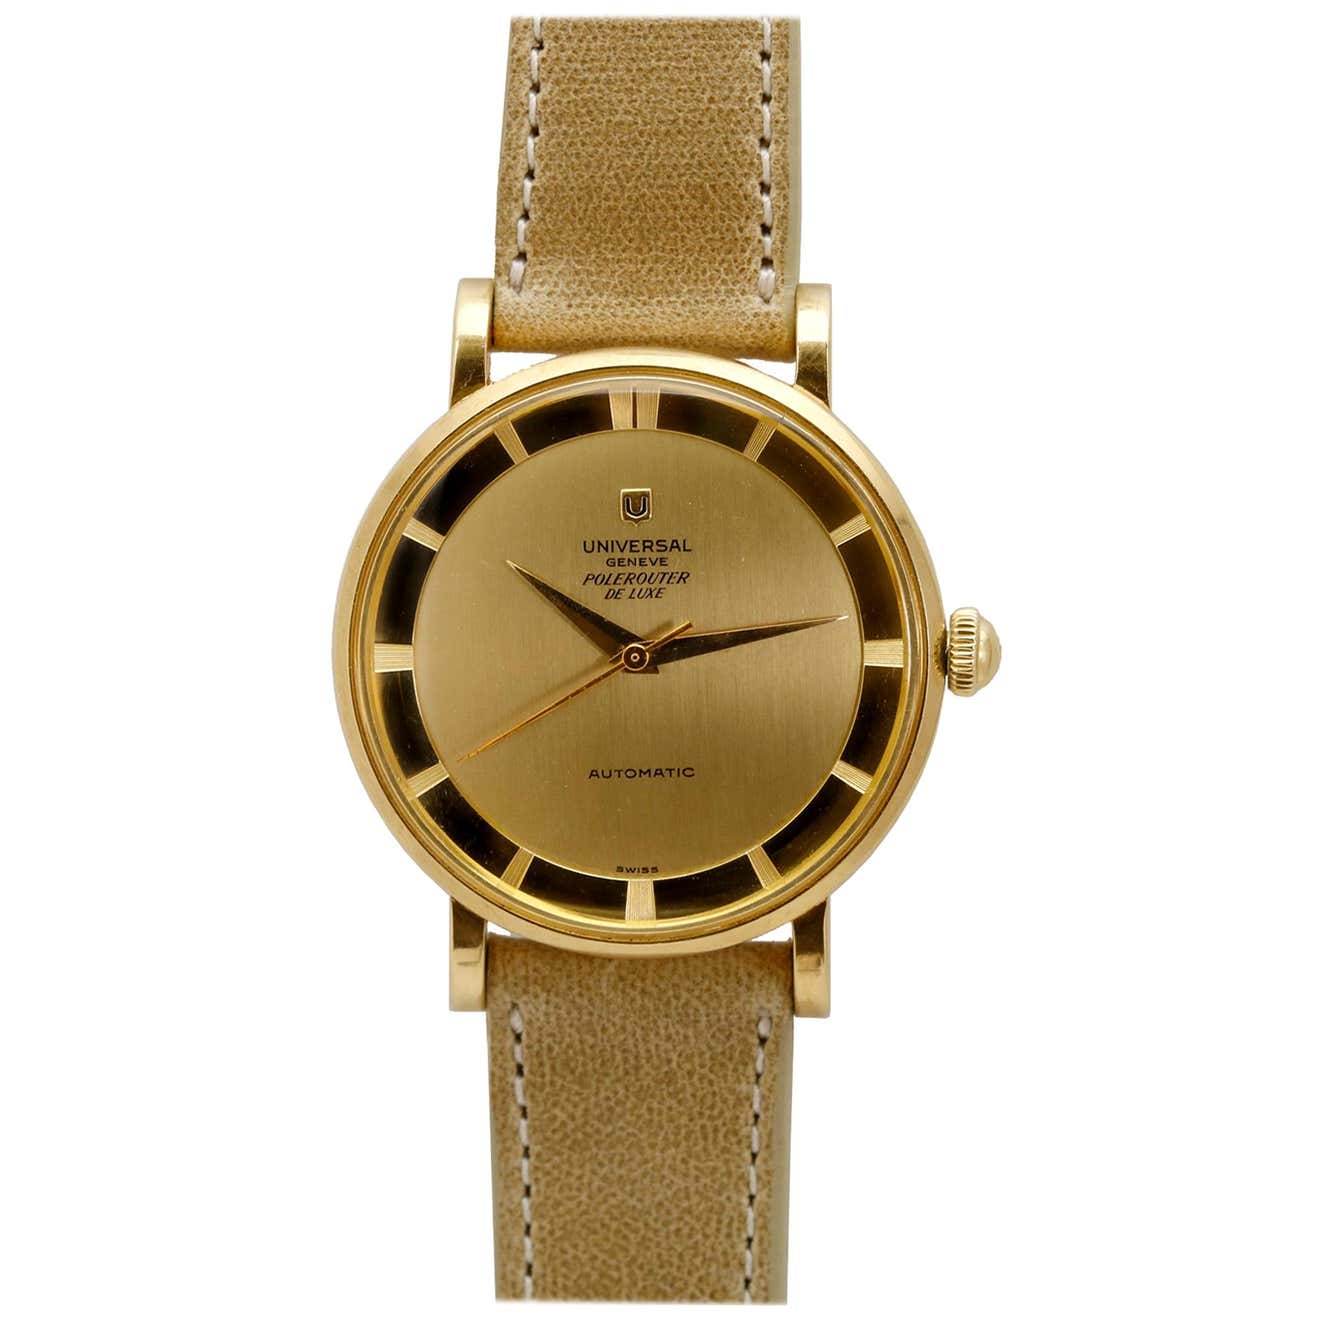 Universal Geneve Polerouter De Luxe Ref B10234 1 Yellow Gold Wristwatch ...